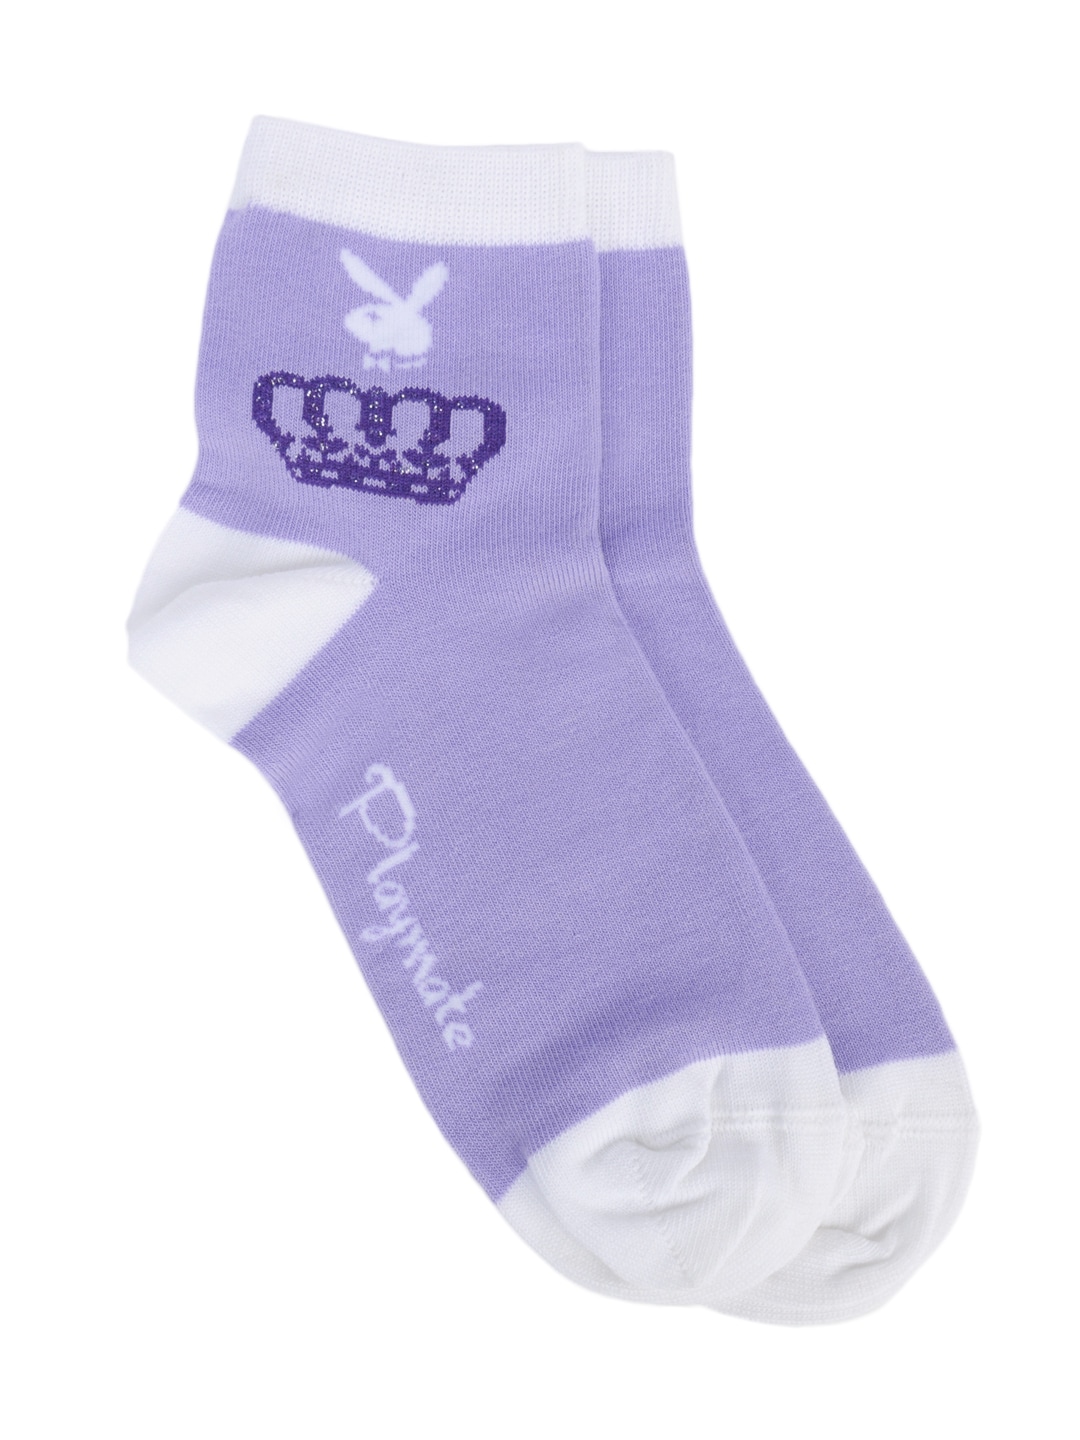 Playboy Women Playmate Lavender Ankle Socks